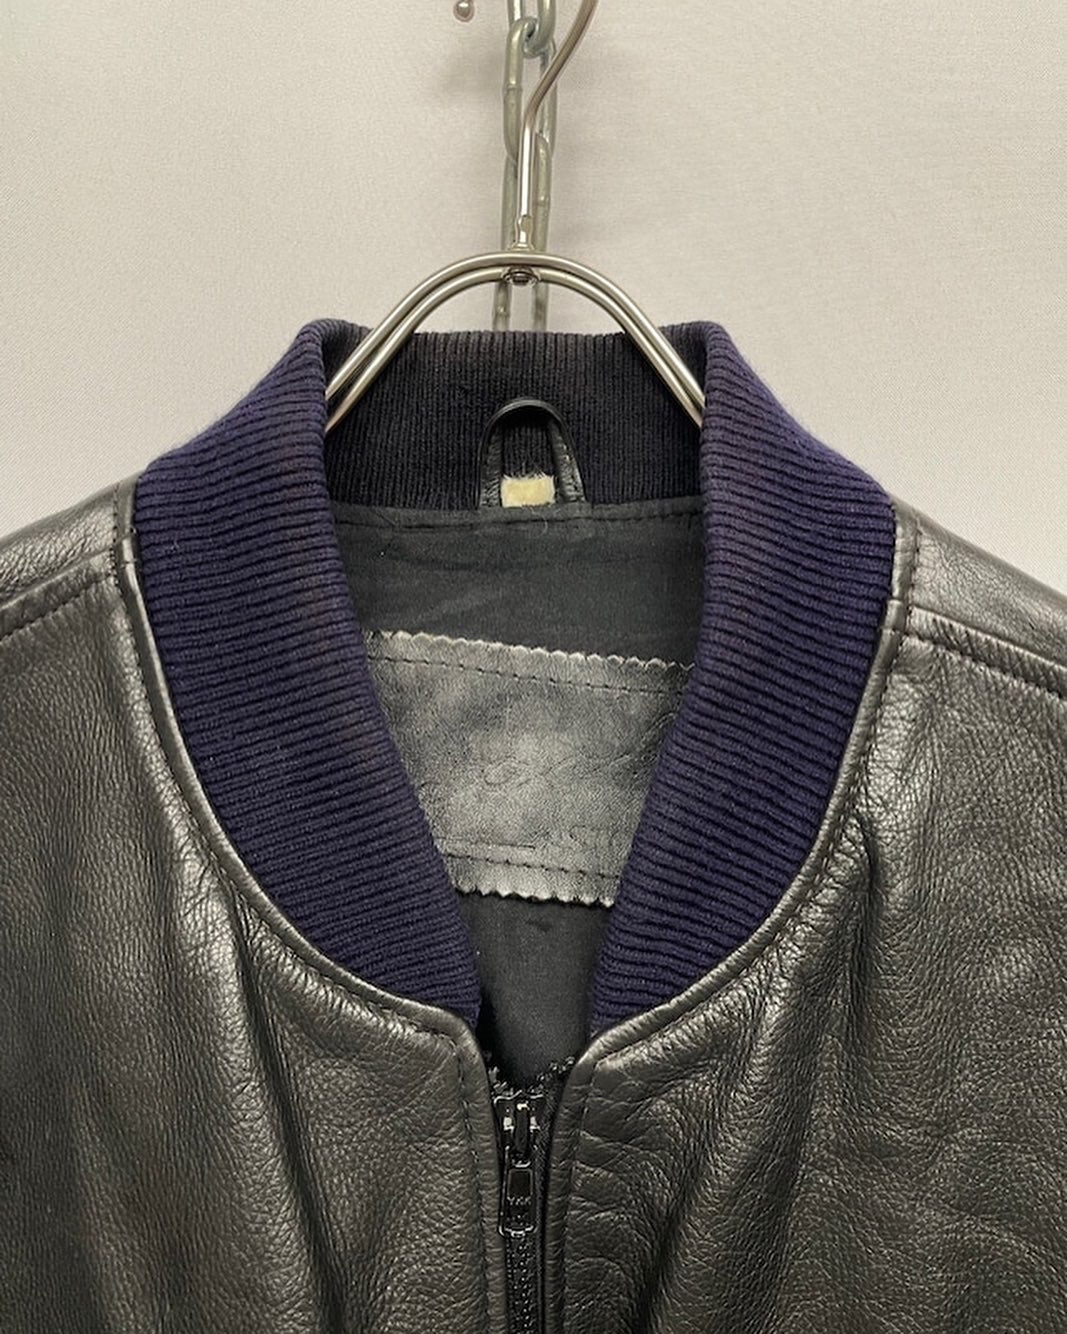 “OLD” MA-1 Type Leather Jacket